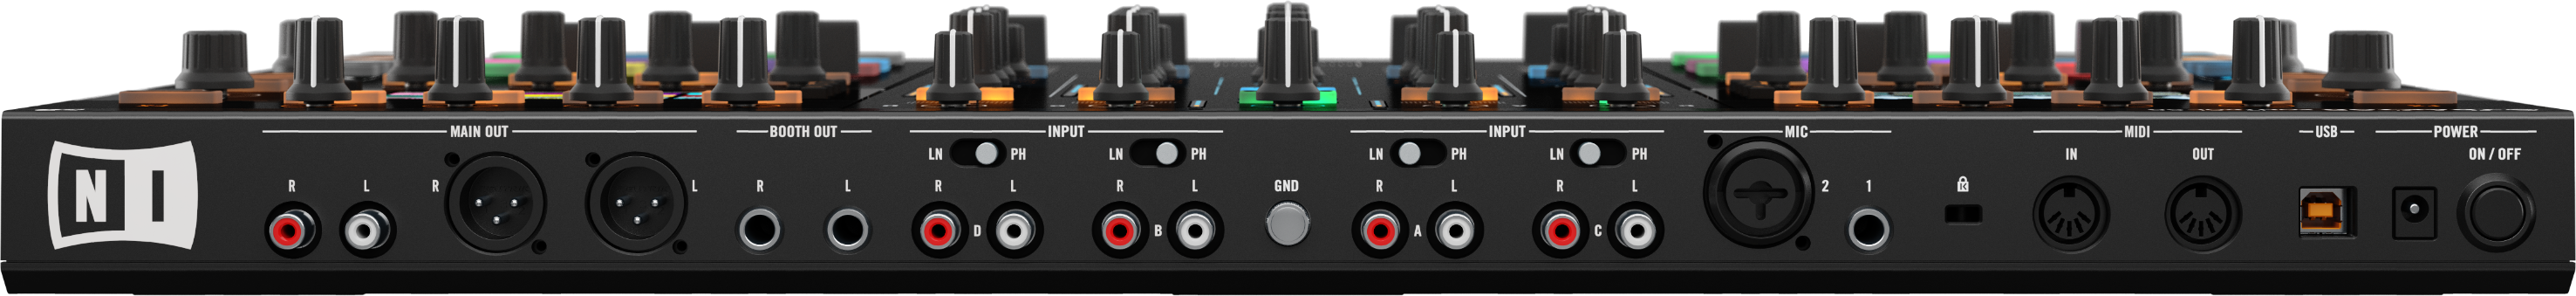 Native Instruments Traktor Kontrol S8 - USB DJ-Controller - Variation 2